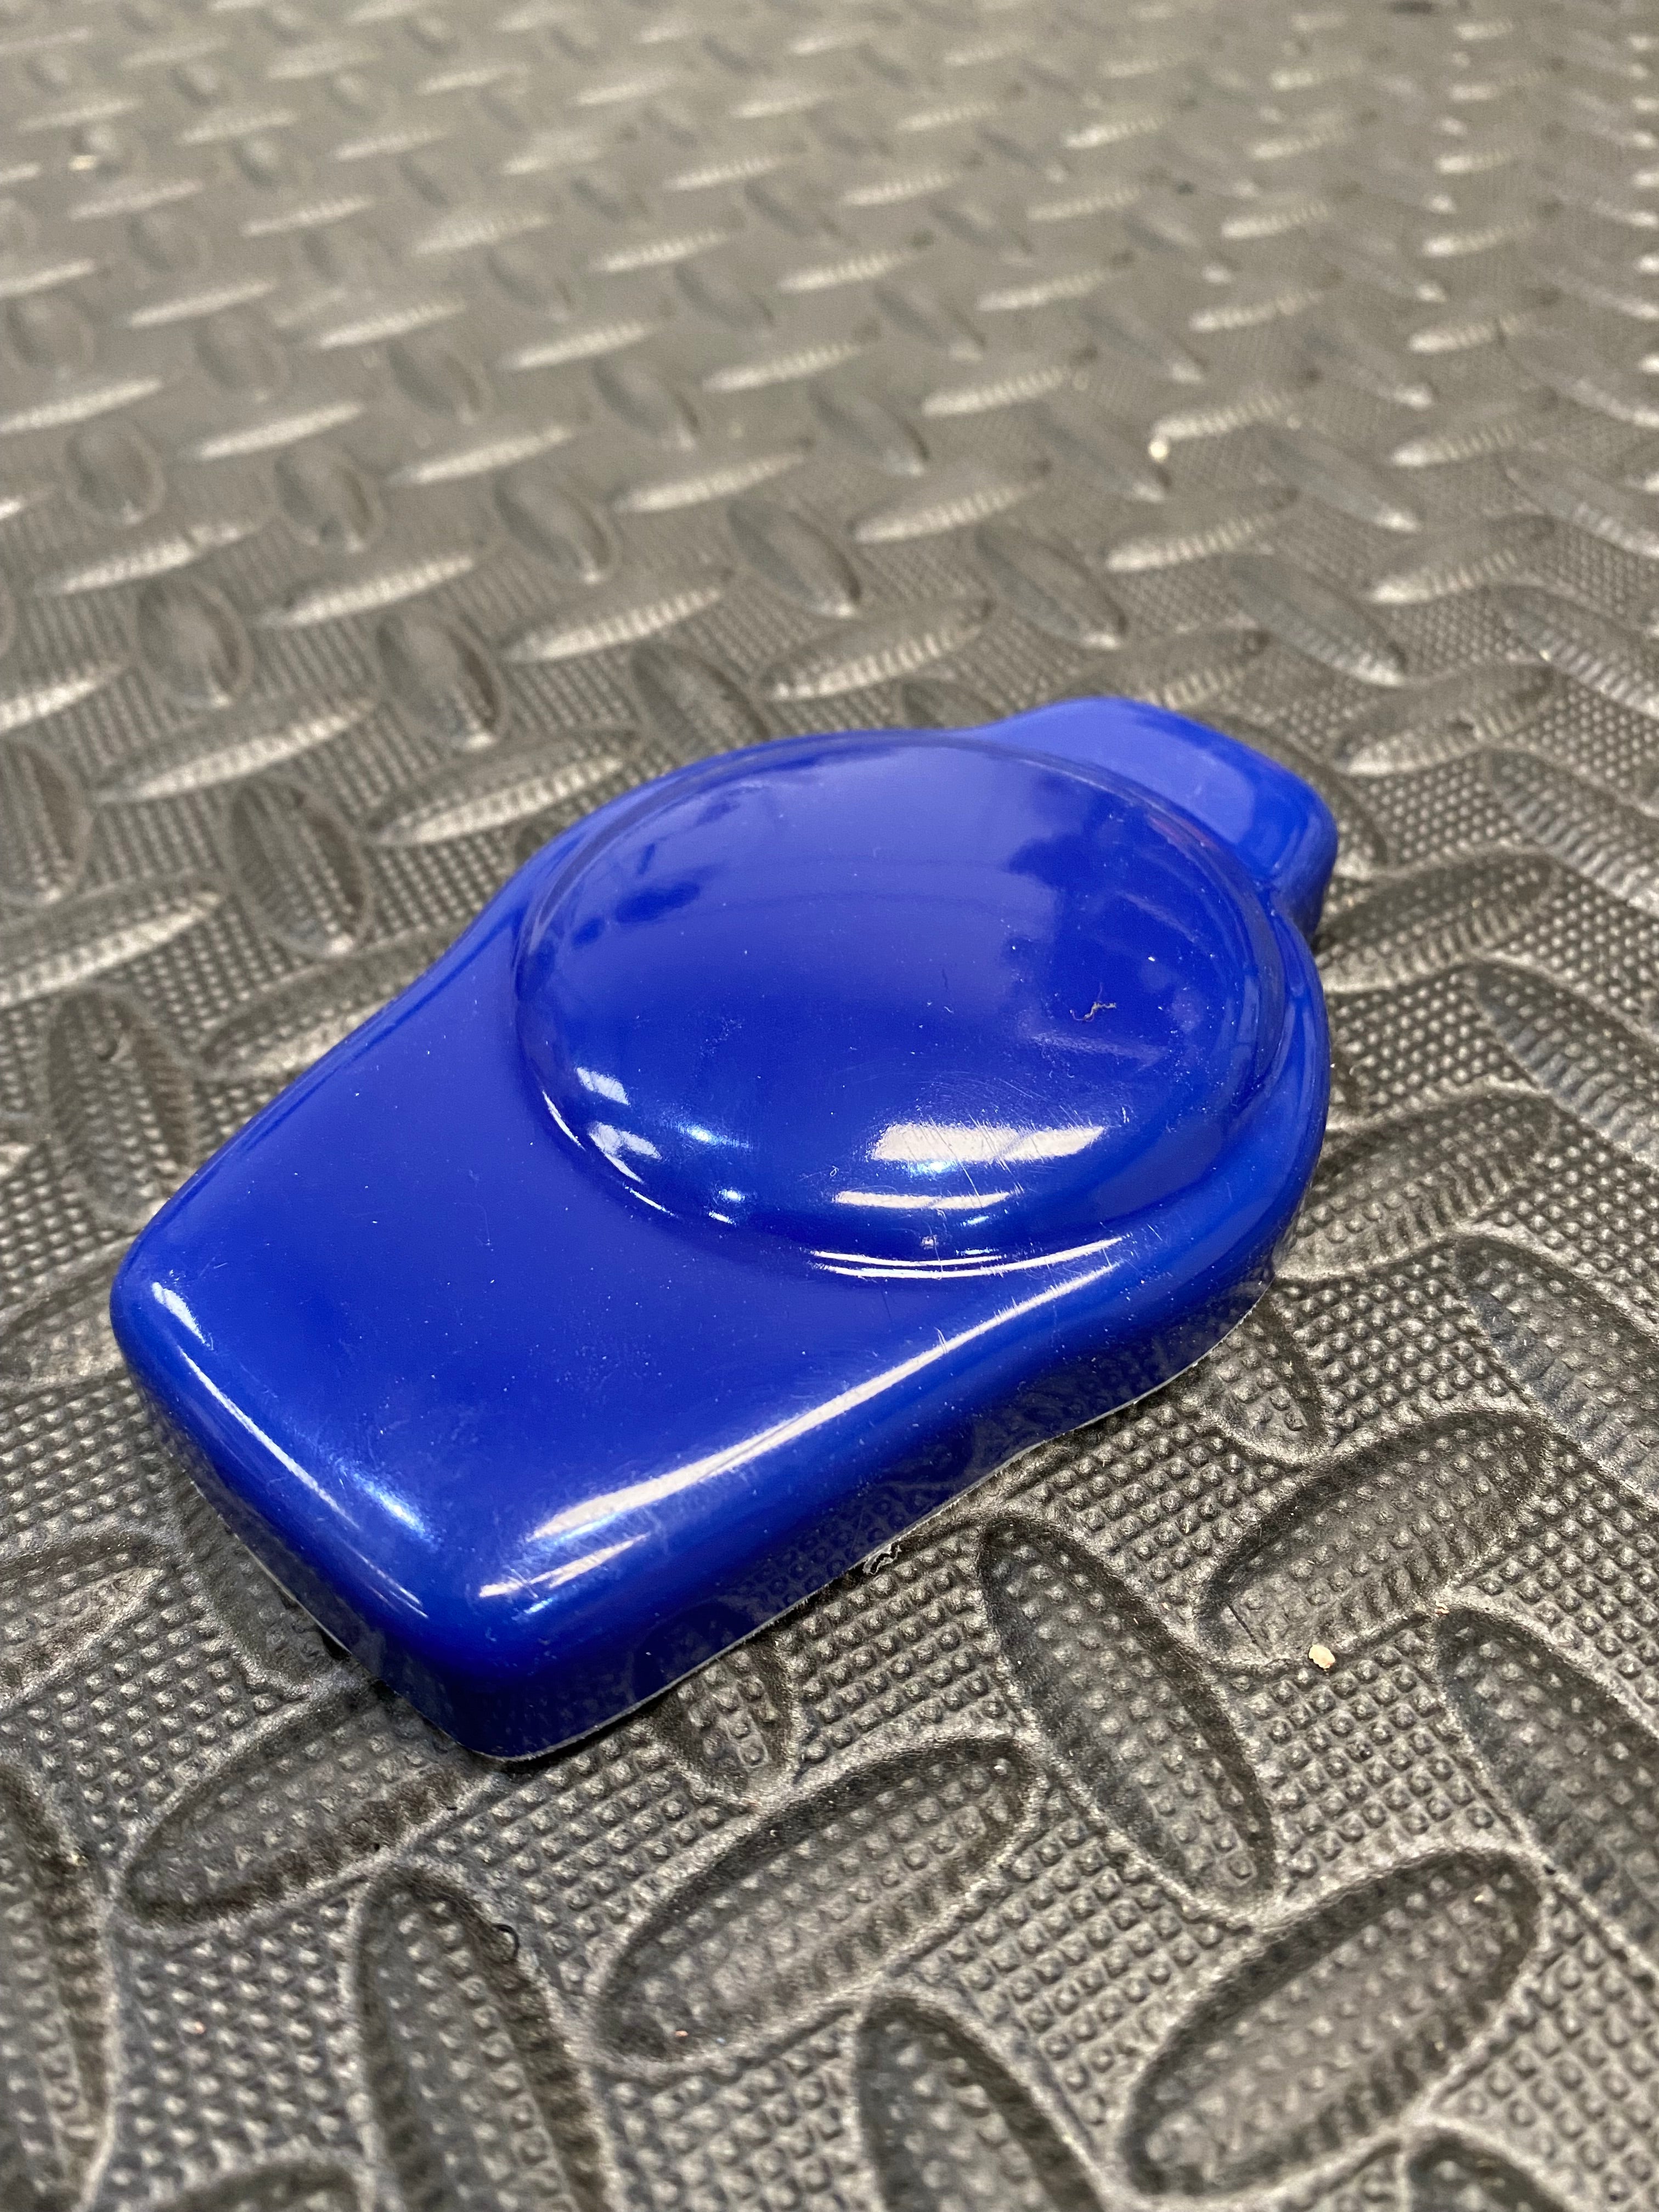 Proform Washer Bottle Cap Cover - Mk5 Volkswagen Golf (Plastic Finishes)